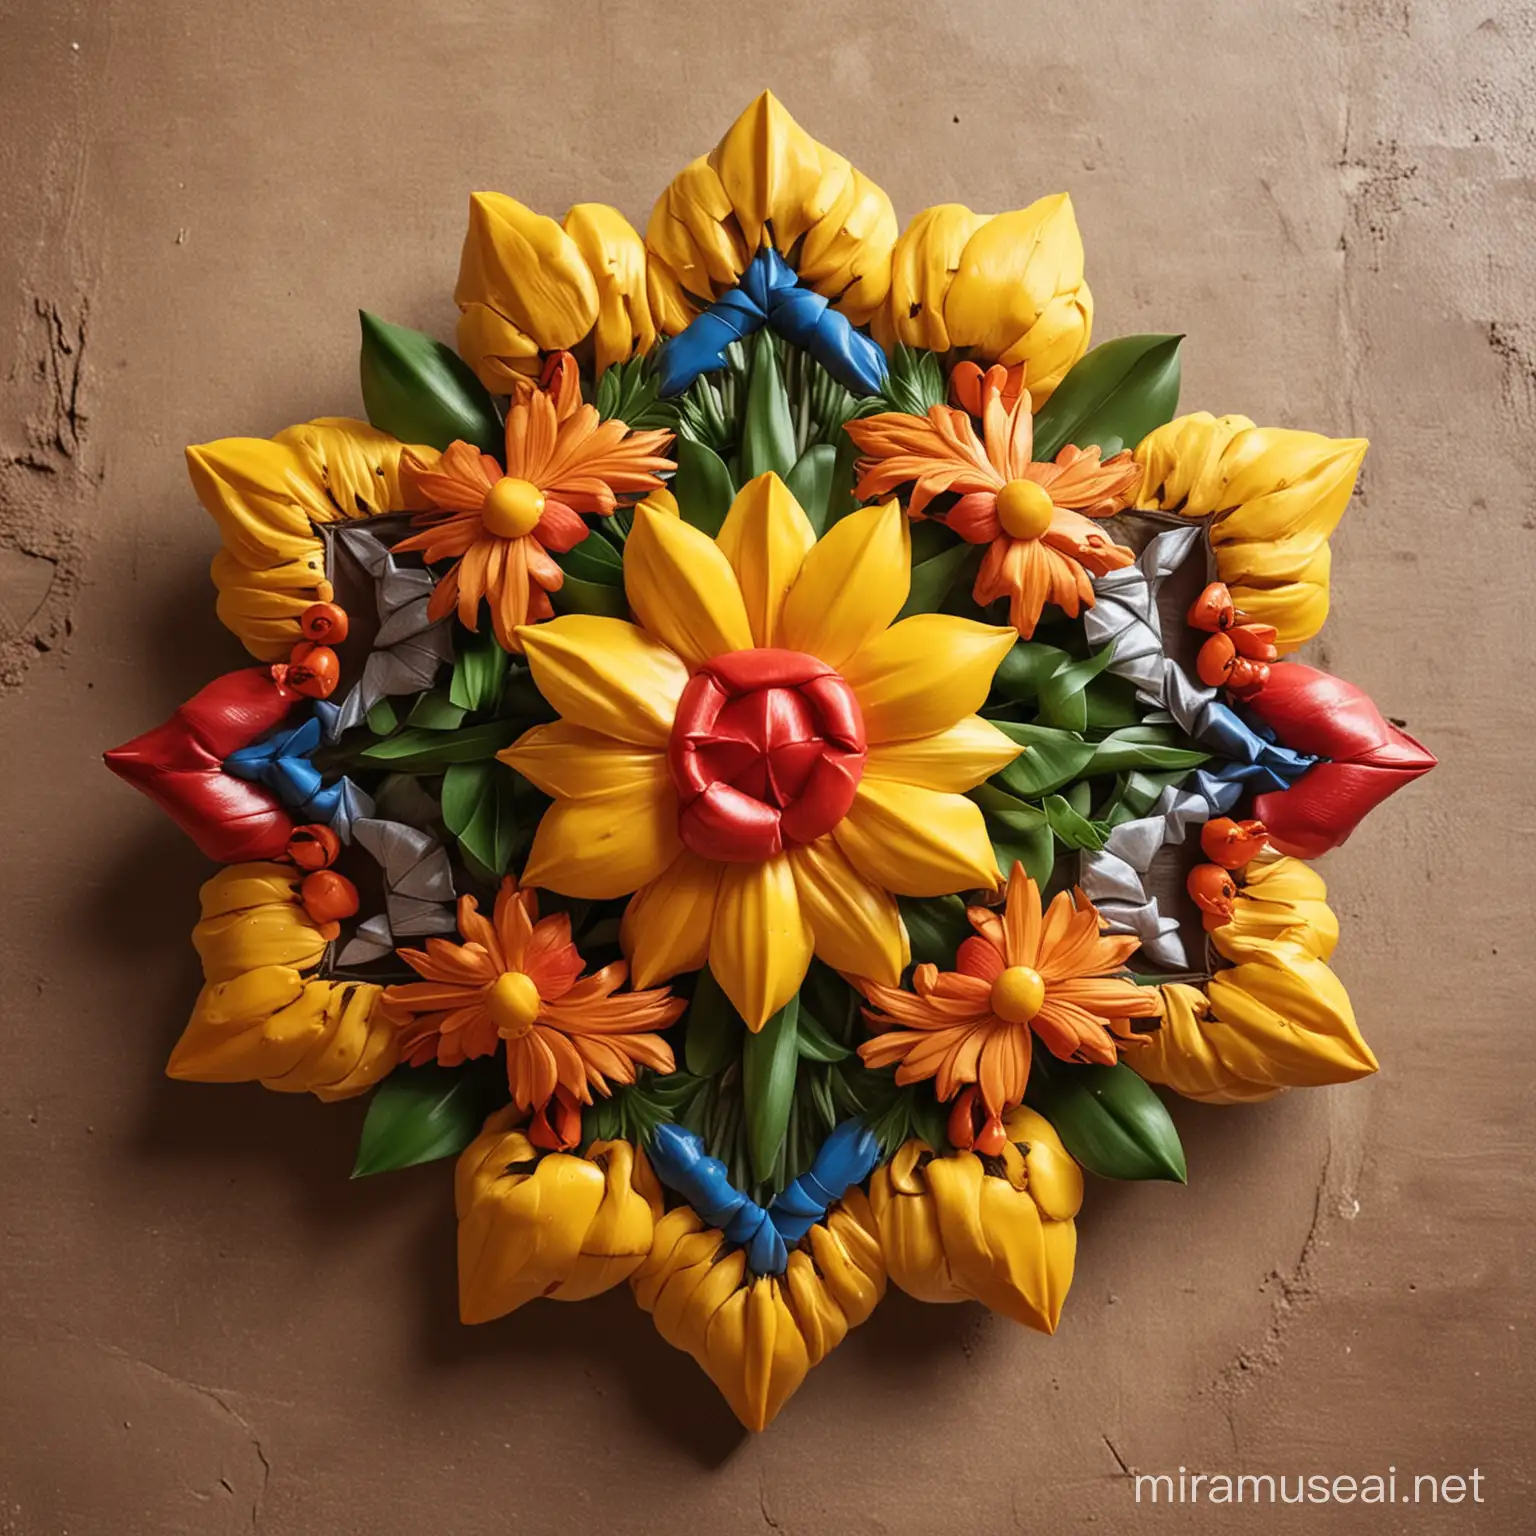 Amazigh Cultural Symbol Bouquet of Flowers